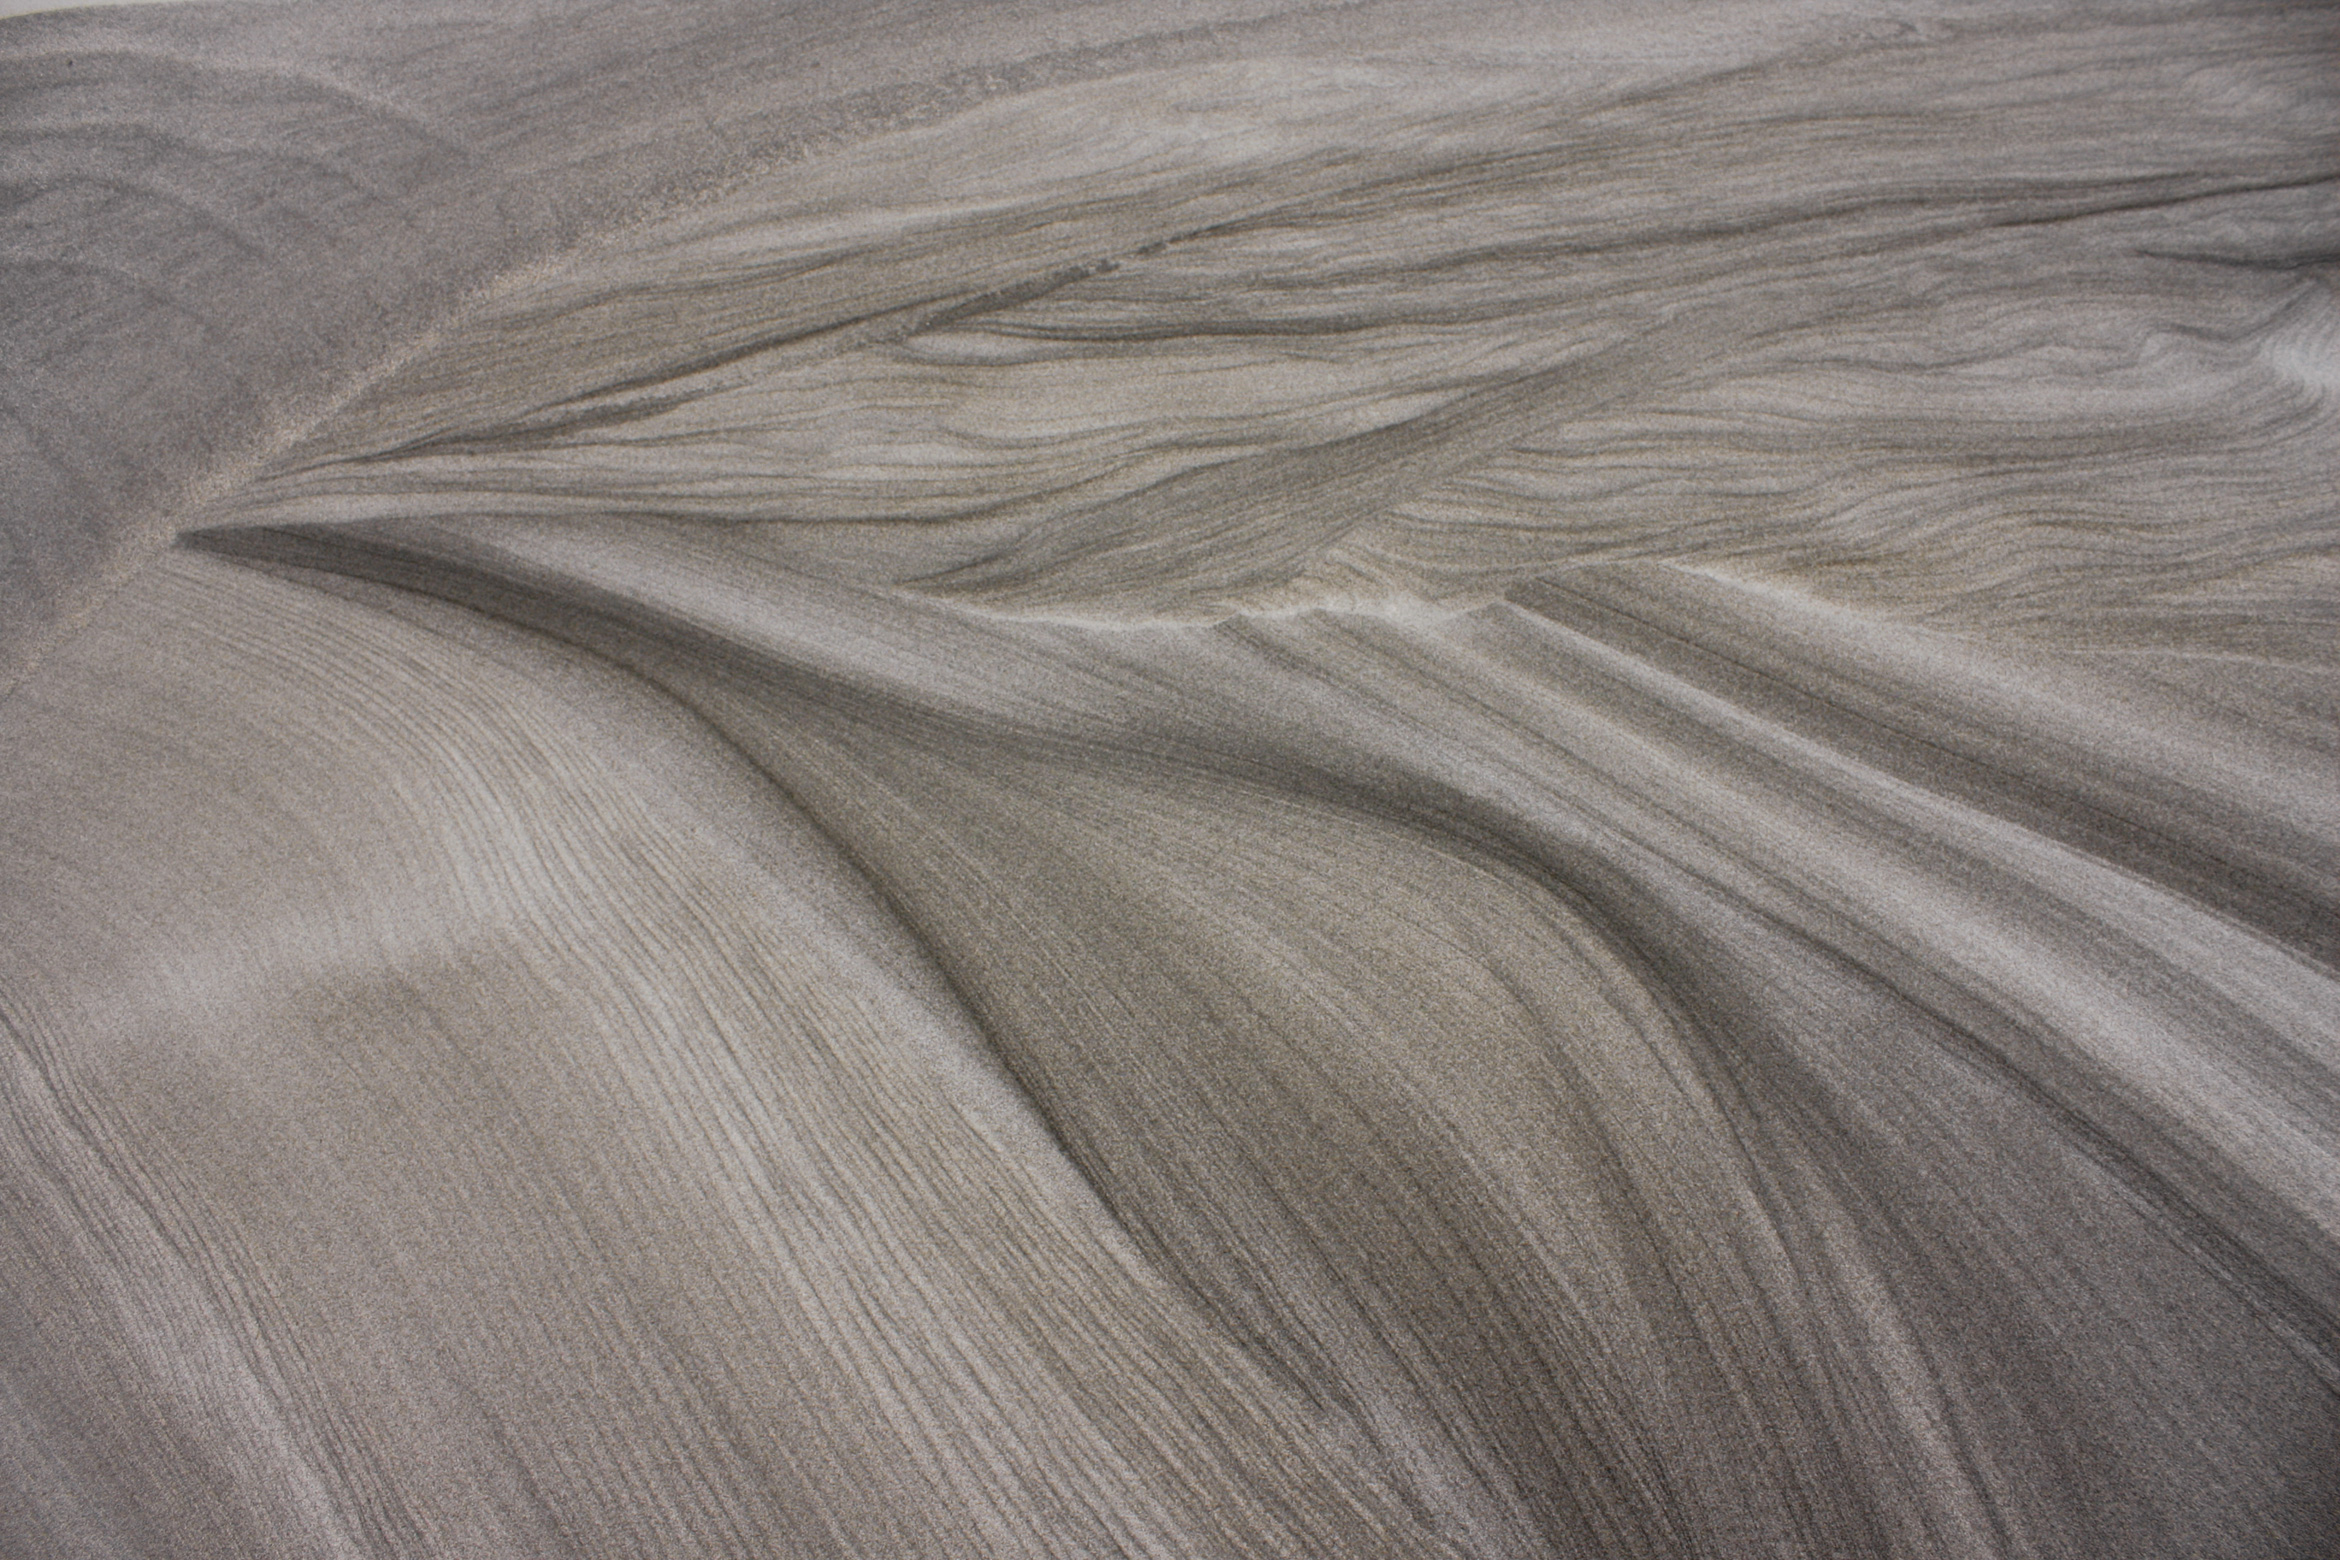 sand-patterns-wind-art-black-sand